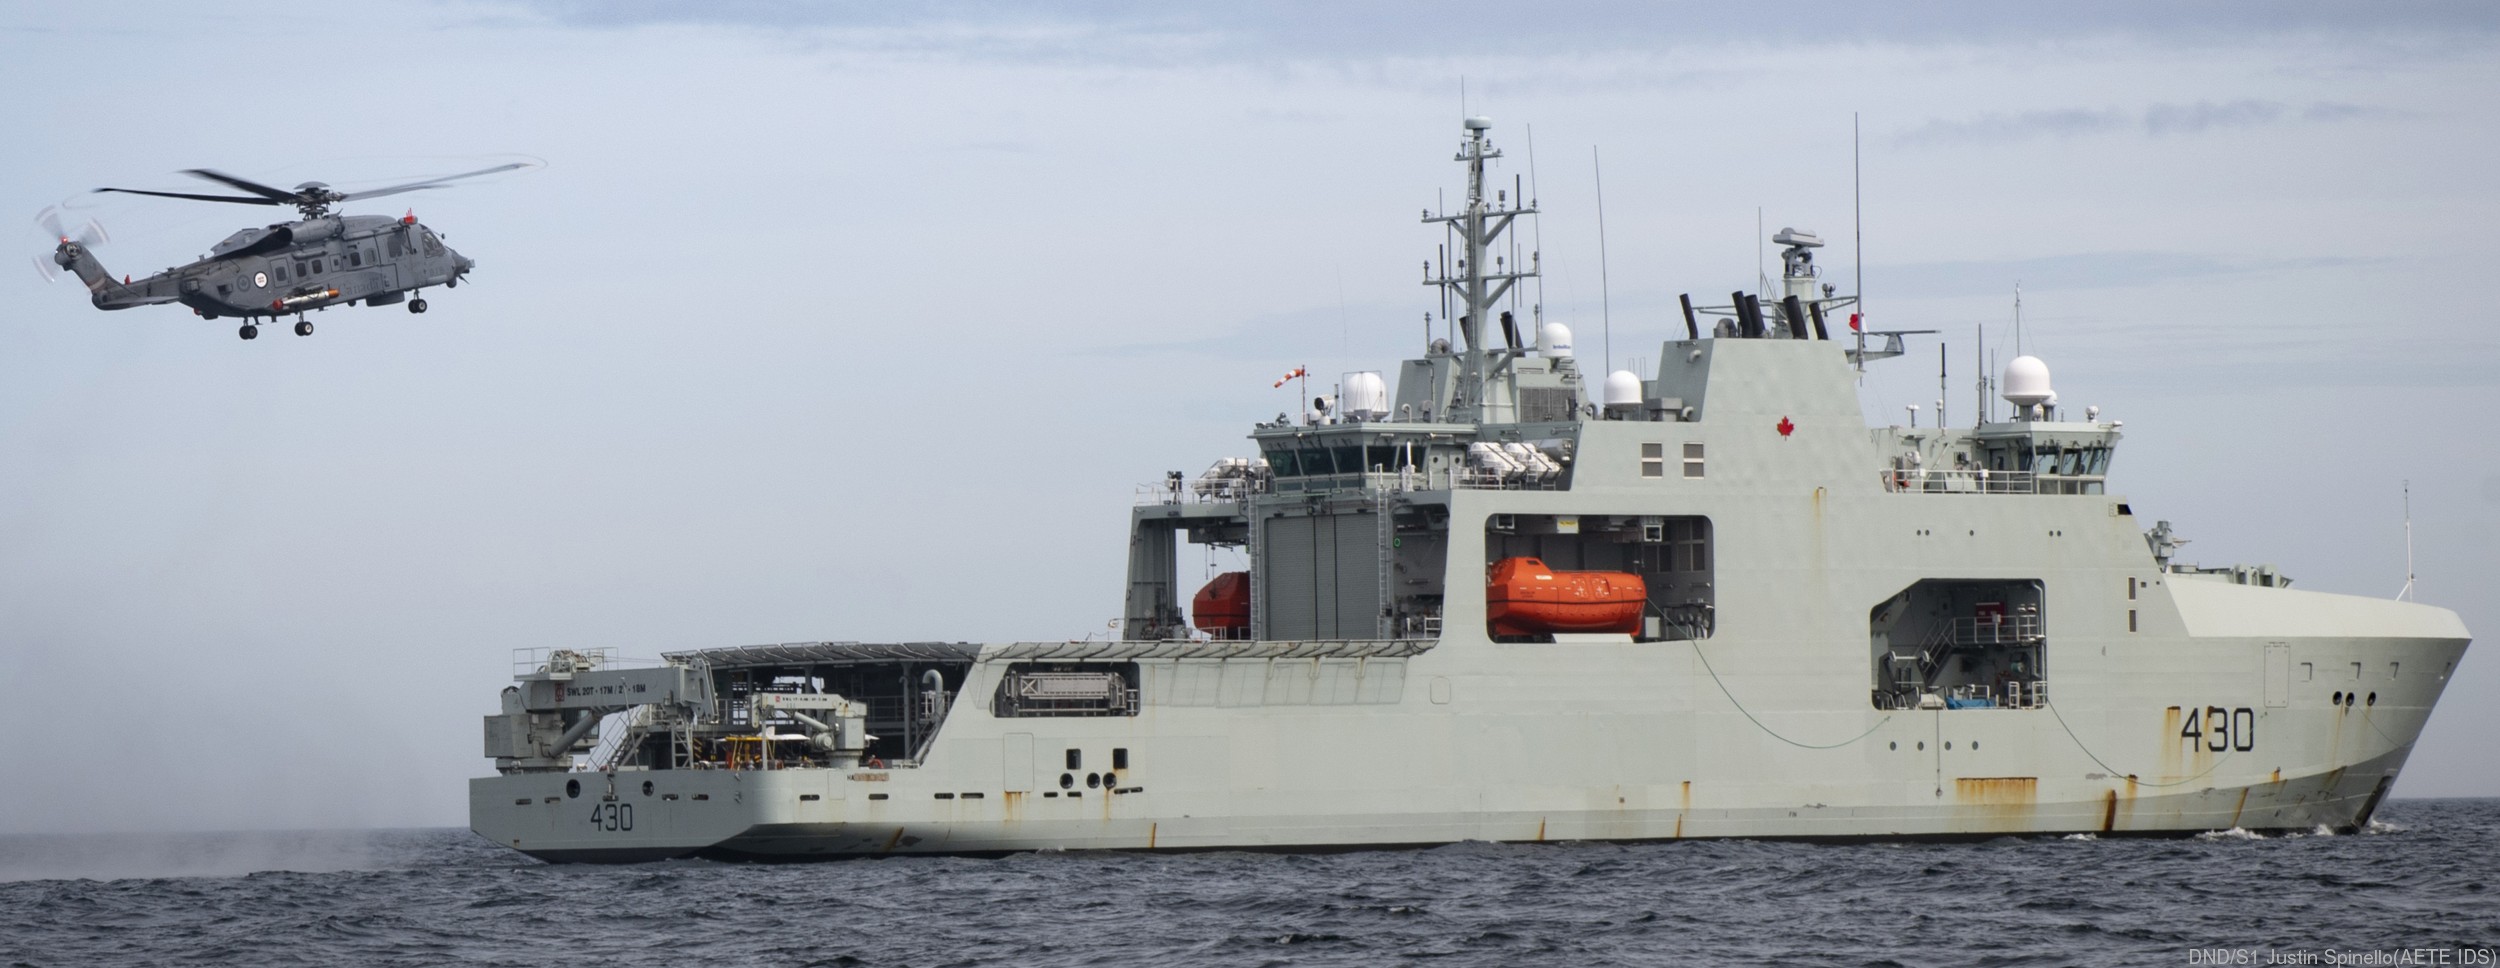 aopv-430 hmcs harry dewolf arctic offshore patrol vessel ncsm royal canadian navy 02